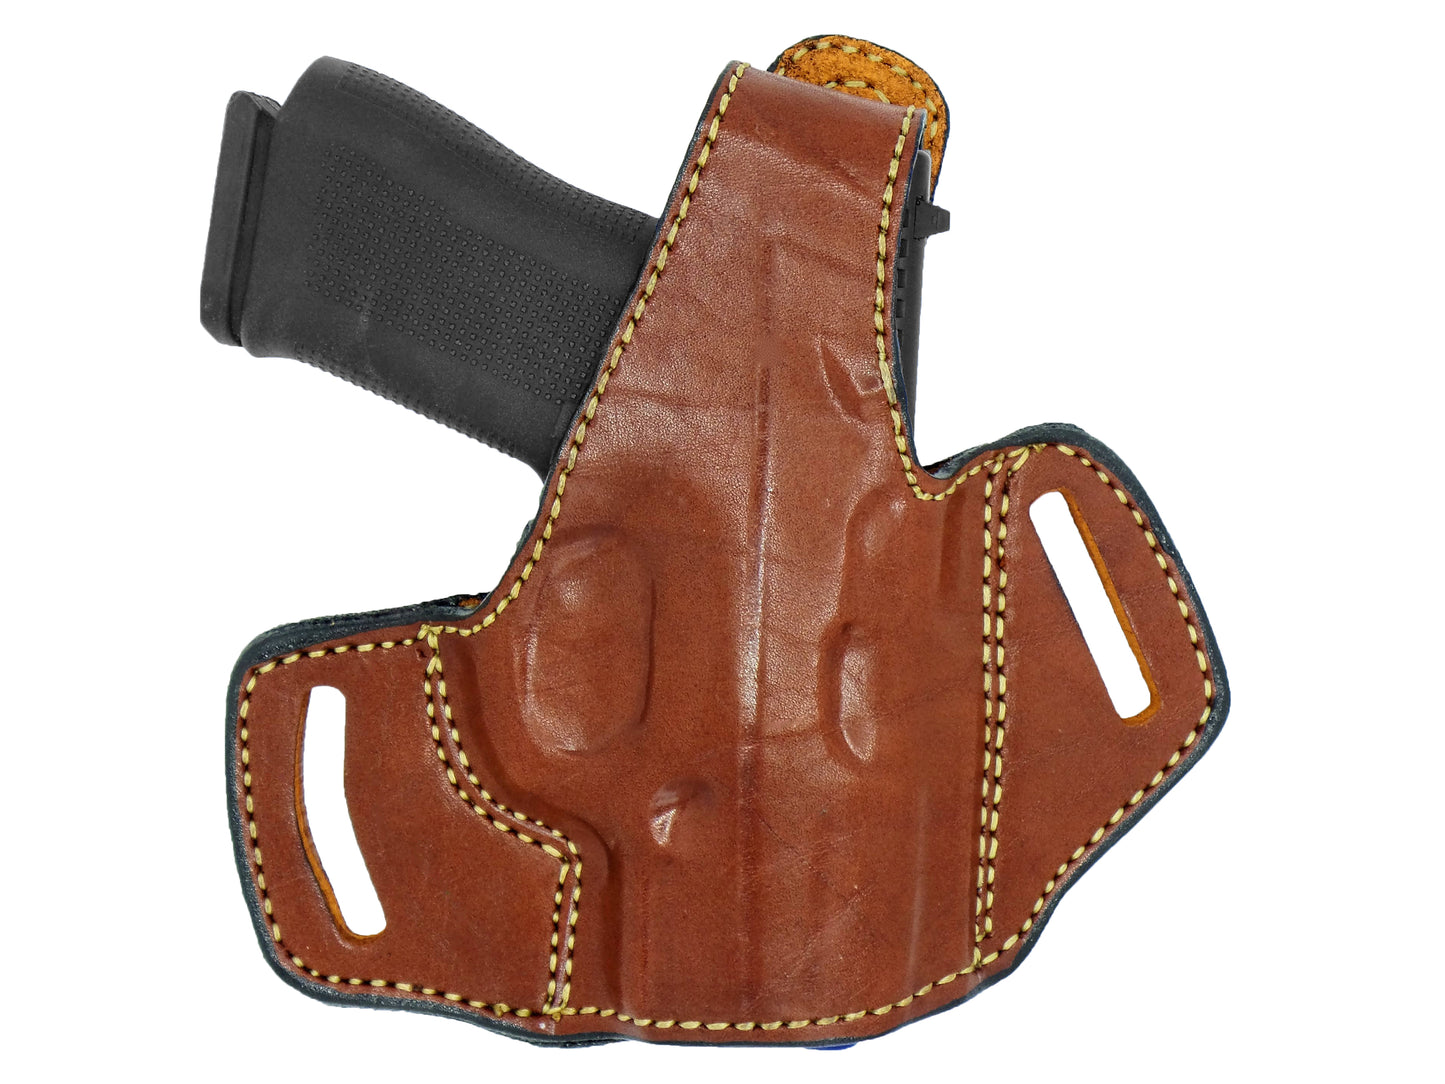 OWB Thumb Break Leather Belt Holster Fits Taurus TH40C